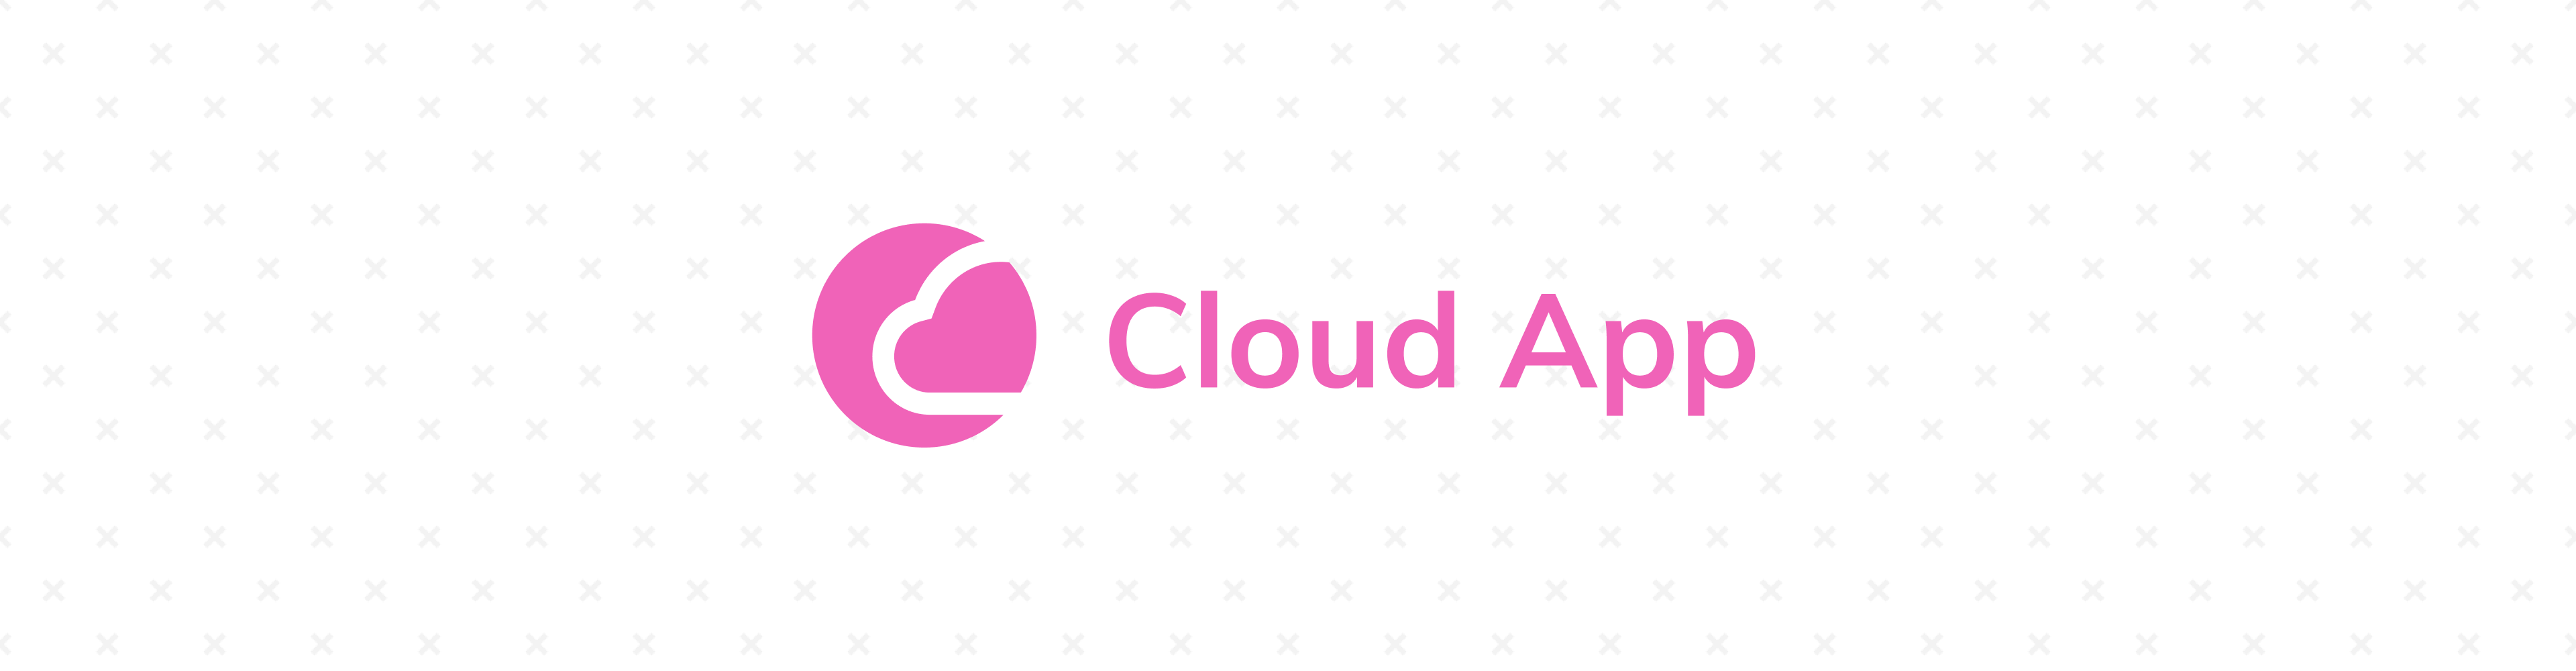 Cloud App Blogpost Image